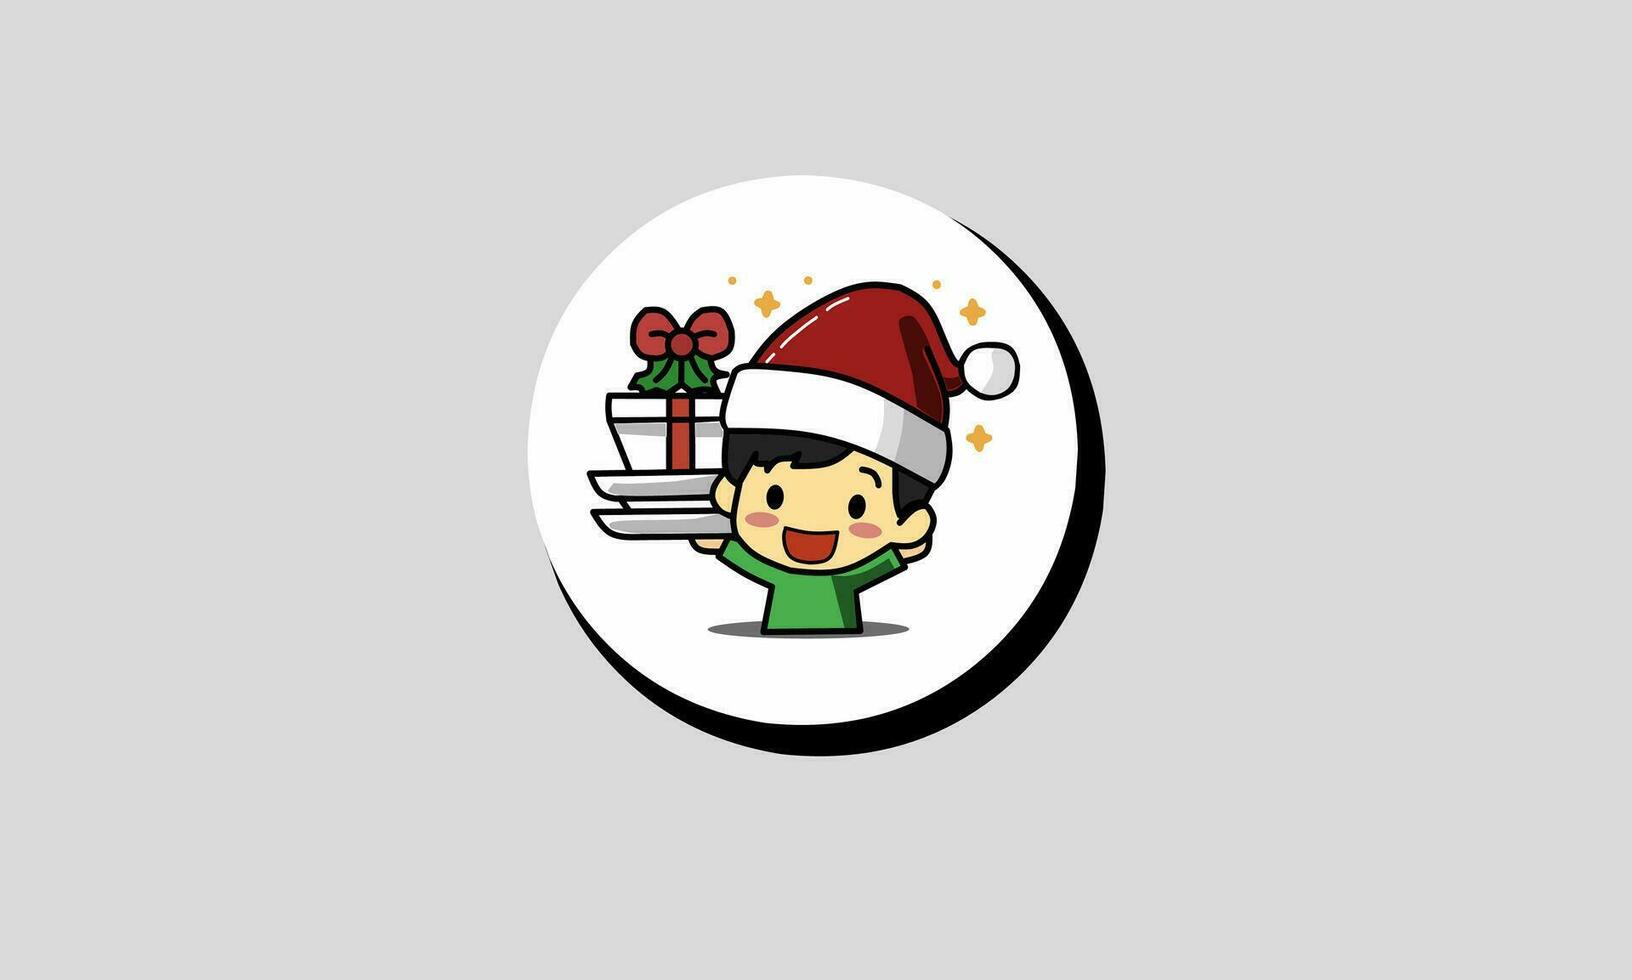 creative design art illustration of a child wearing a Santa hat celebrating Christmas, cartoon small child celebrating Christmas and New Year. vector